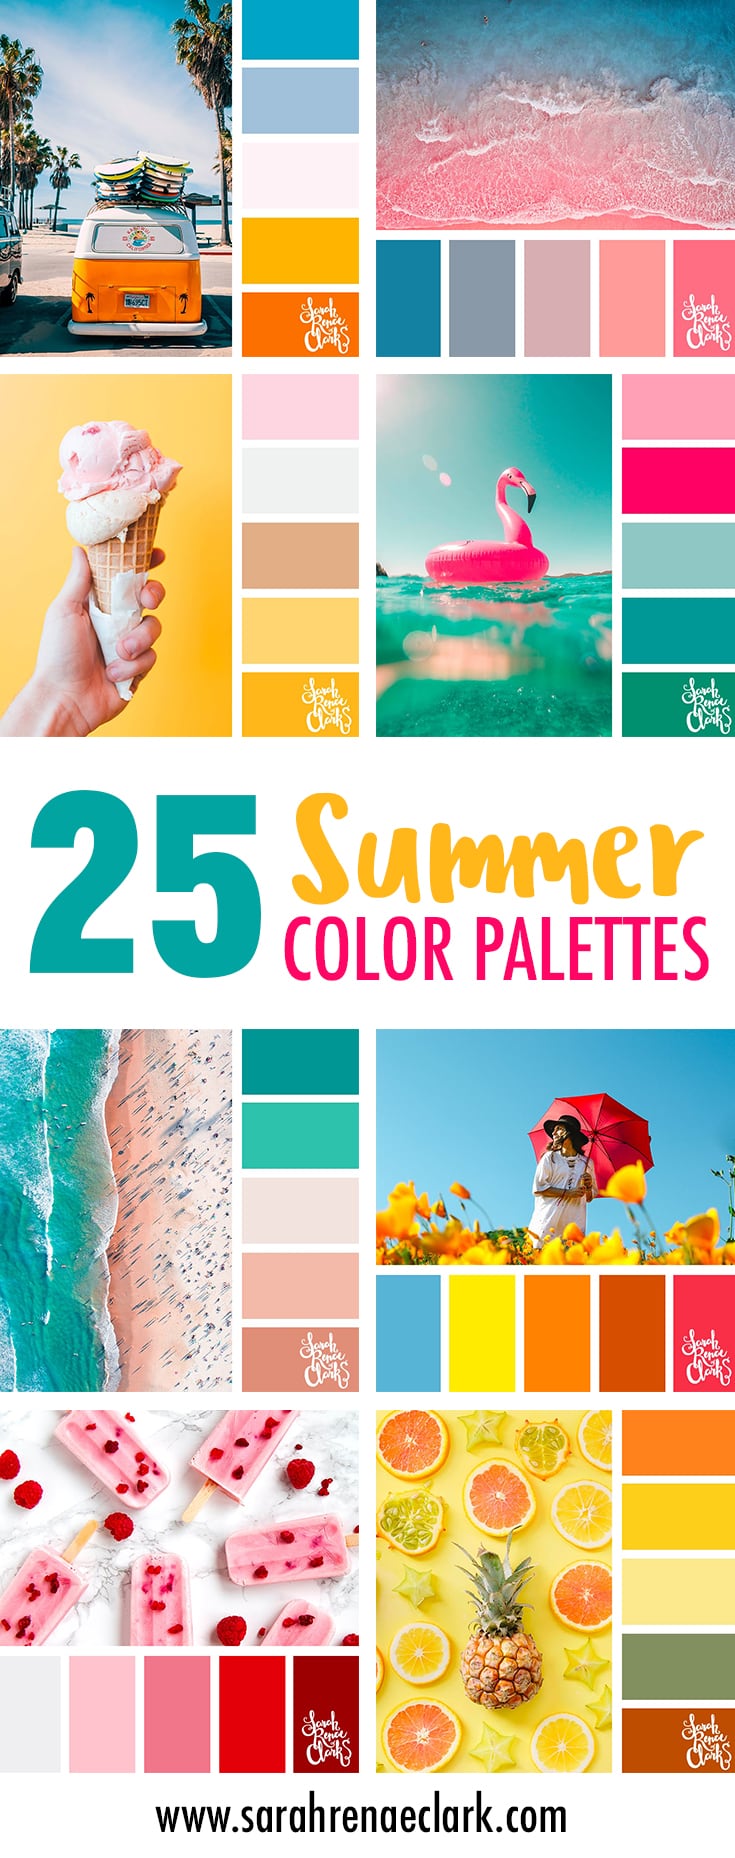 25 Summer Color Palettes